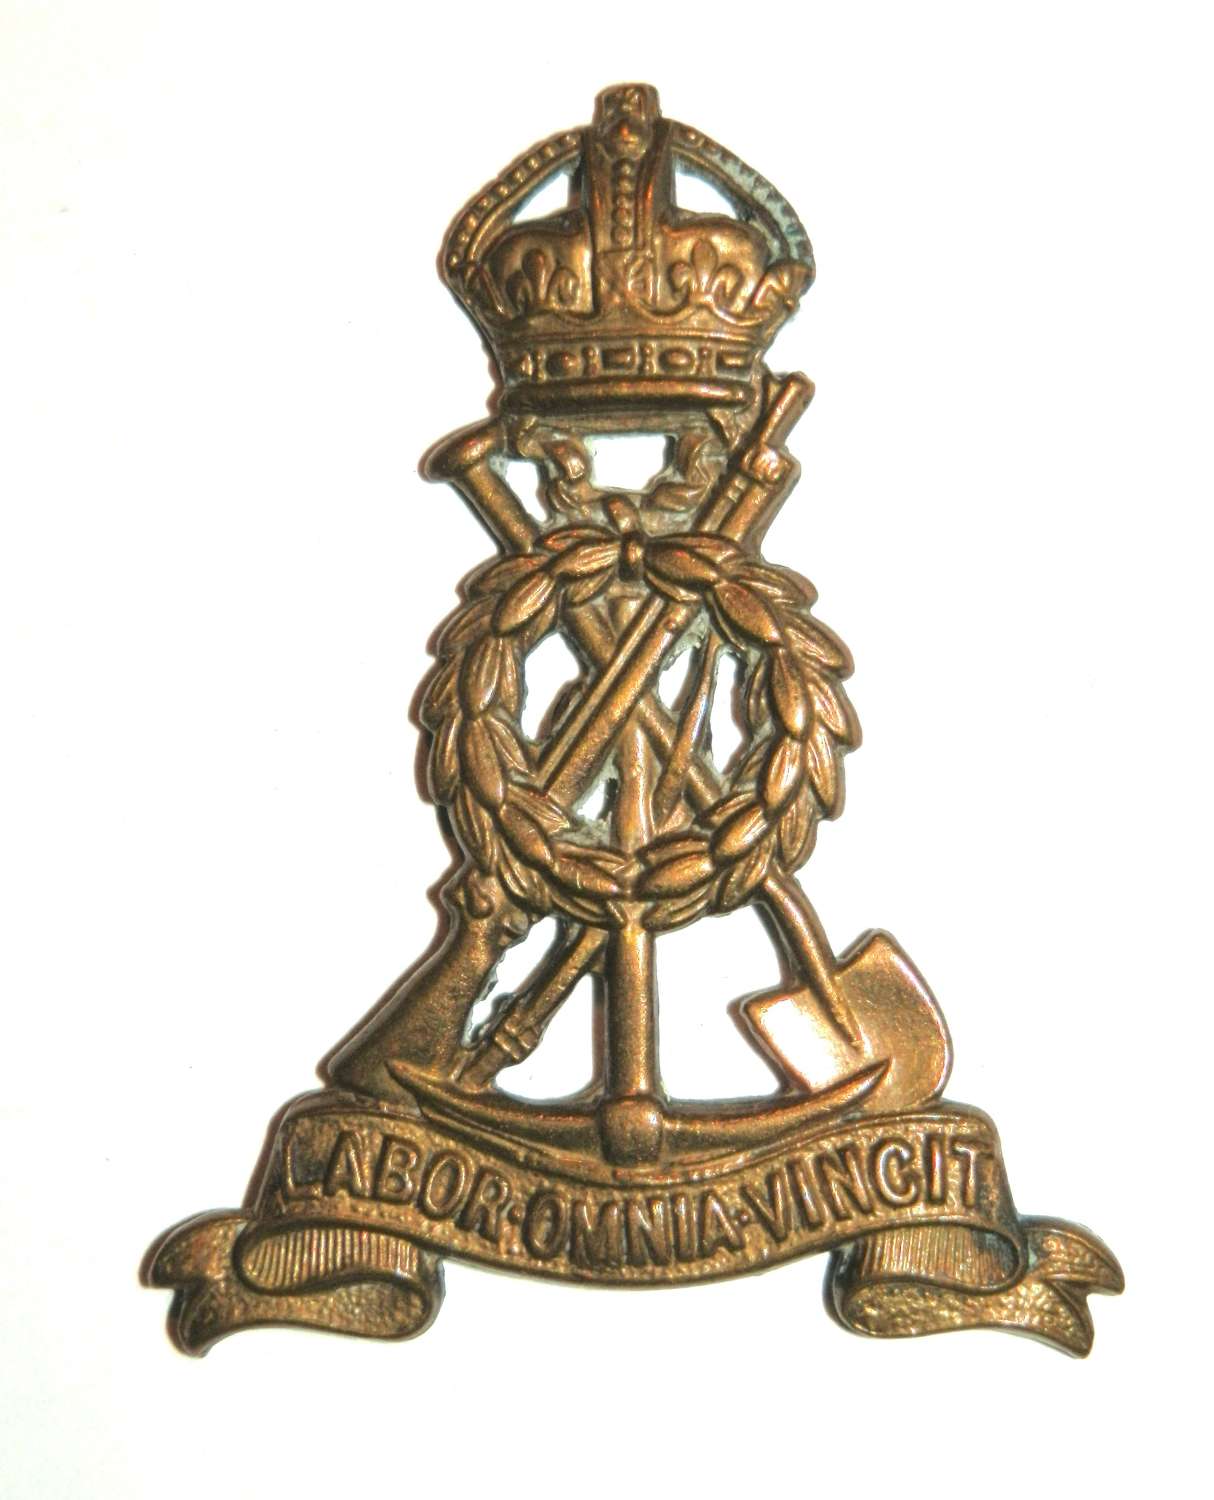 Labour Corps Cap Badge.